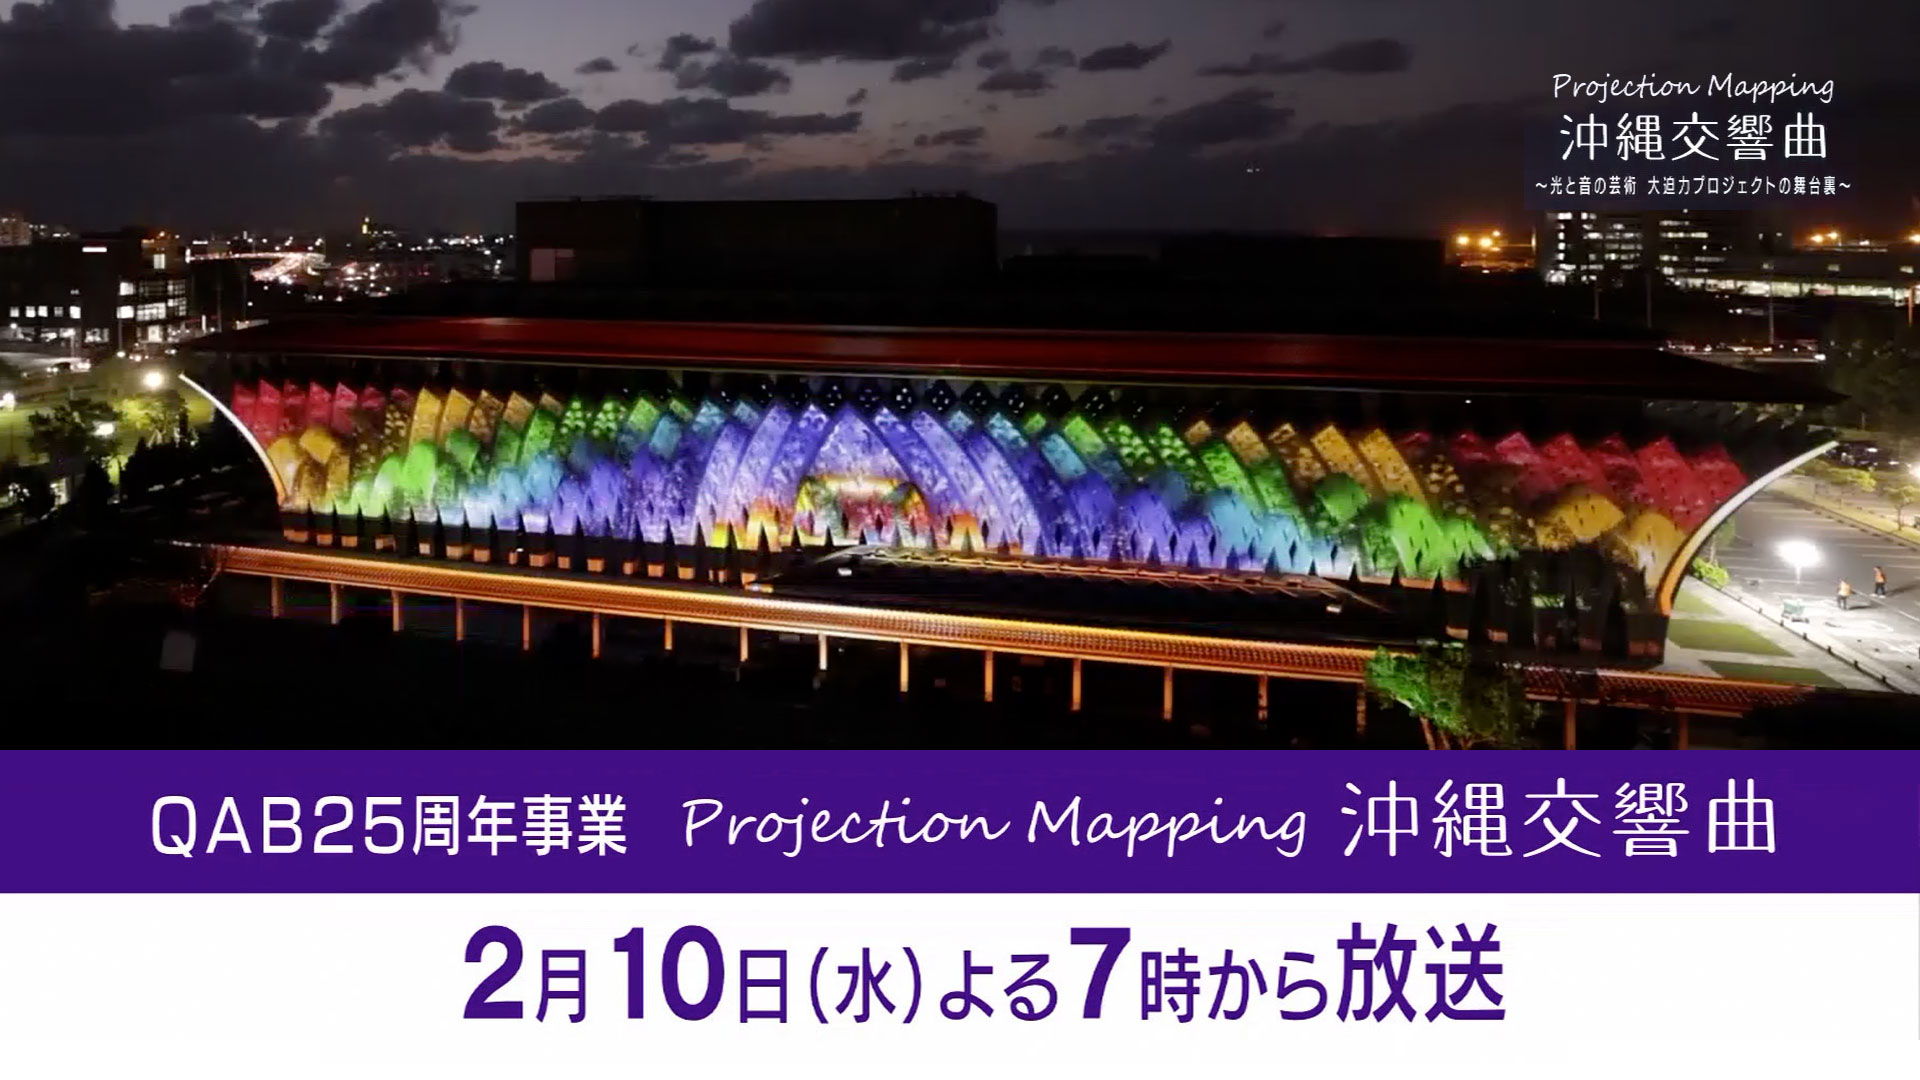 Projection Mapping 沖縄交響曲 〜光と音の芸術 大迫力プロジェクトの舞台裏〜